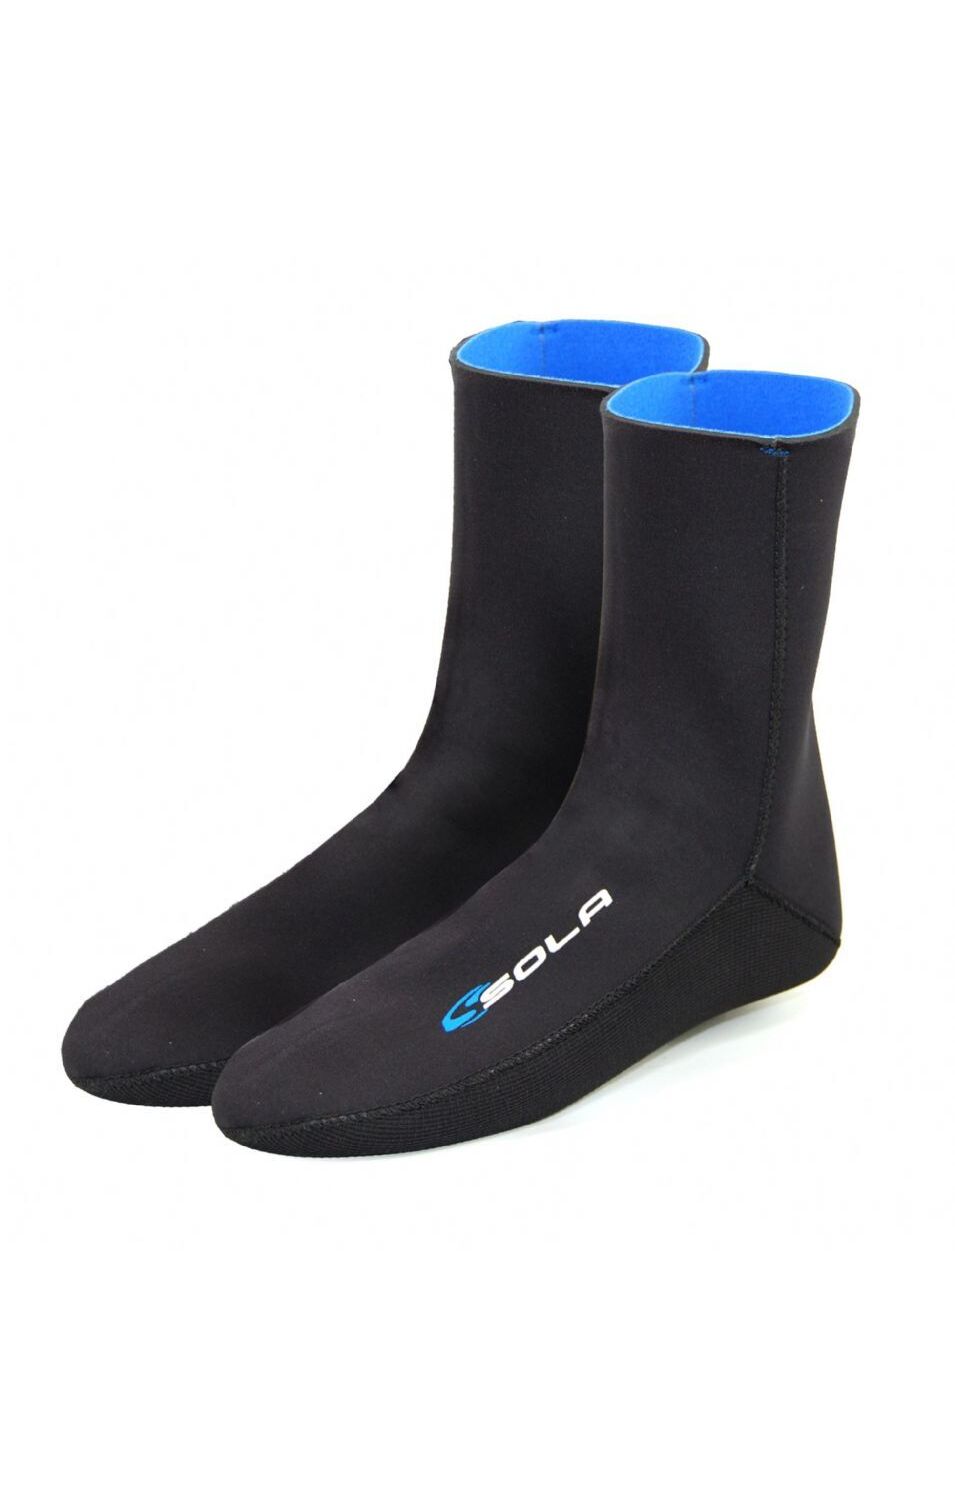 Sola 4mm Blindstitched Neoprene Swimming Sock - A1212